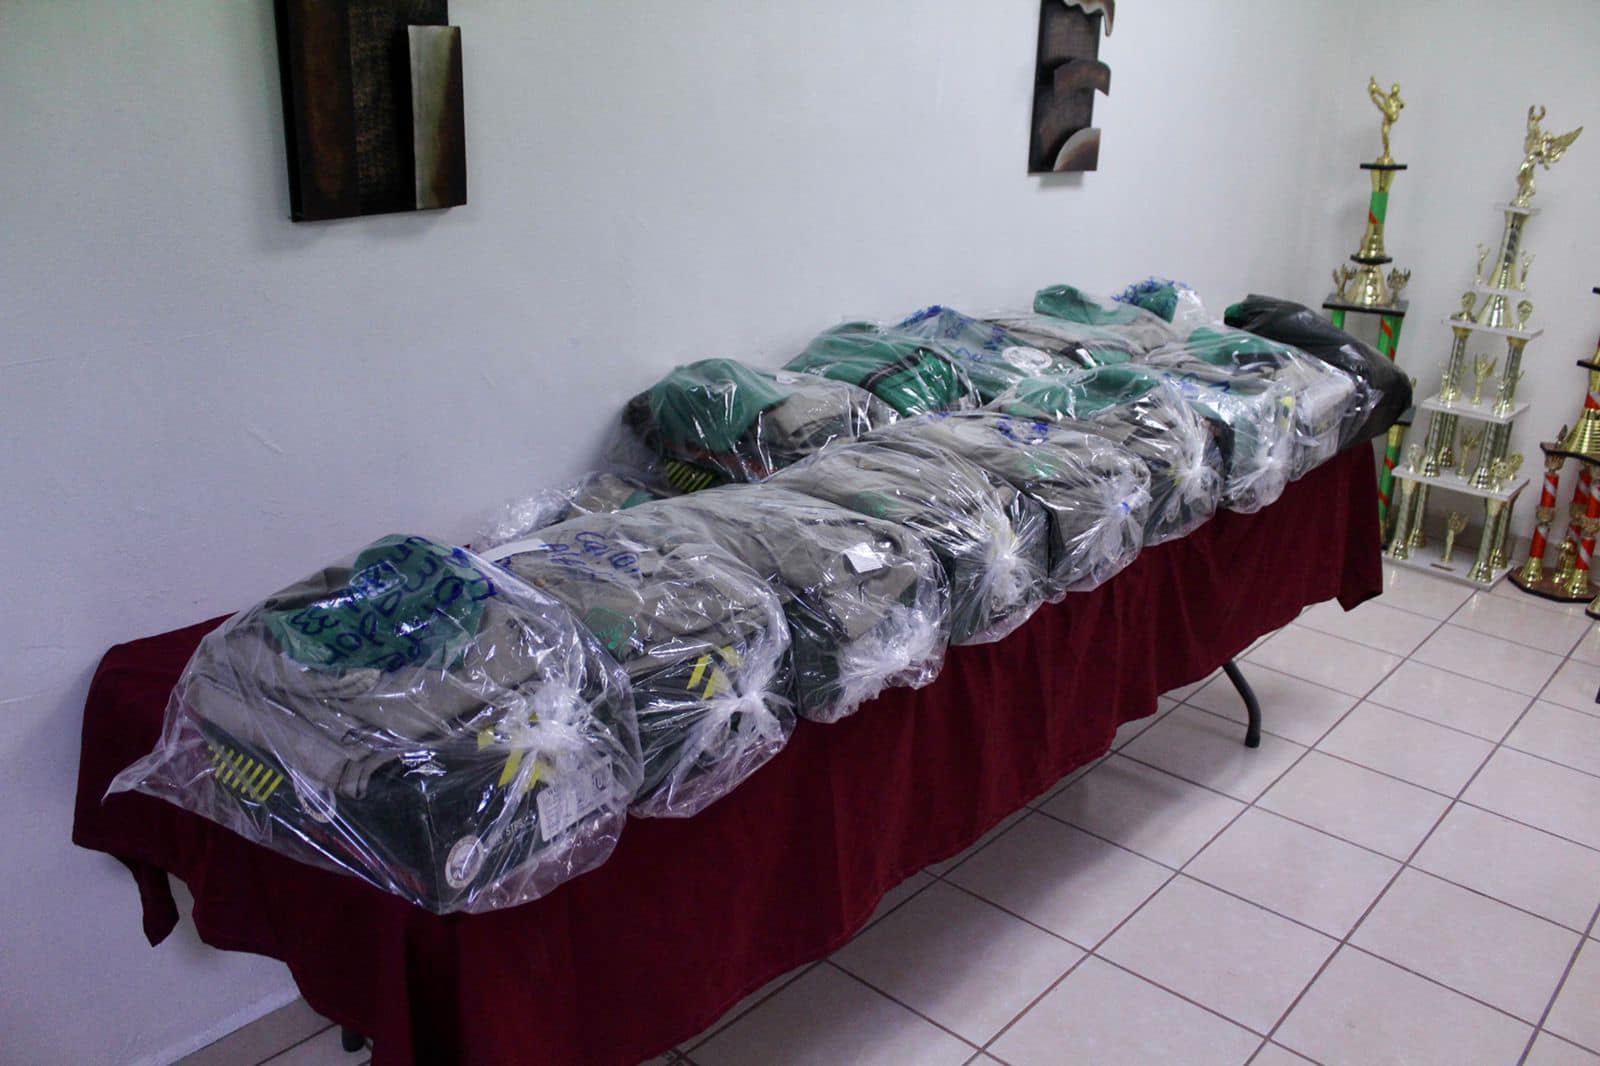 Recibe uniformes personal
operativo de SAPA La Paz